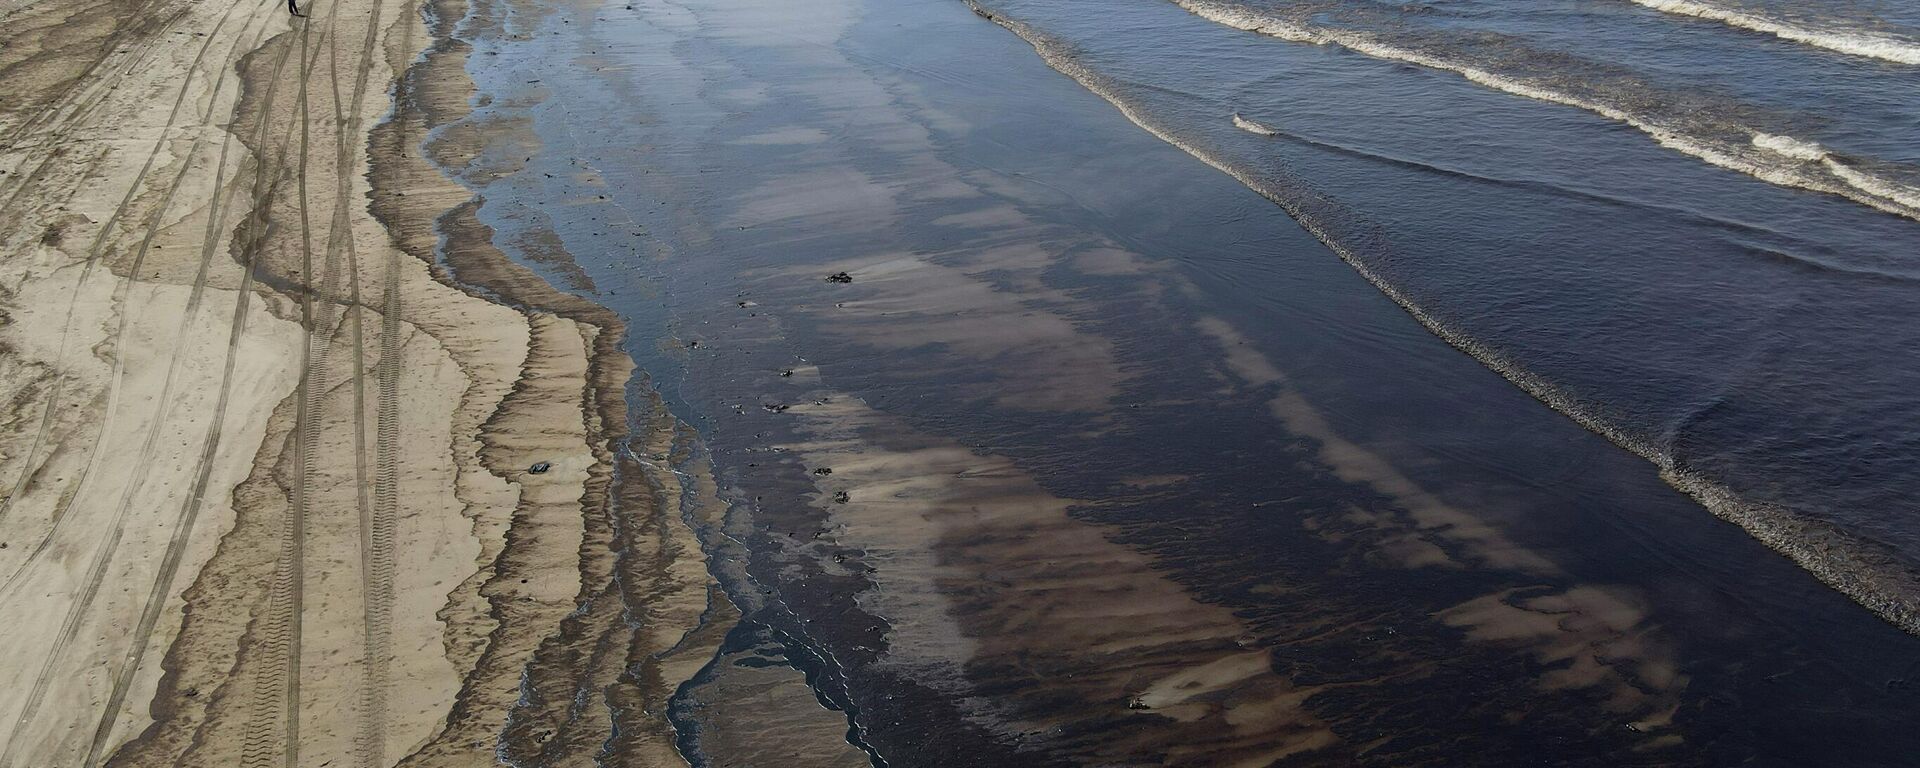 El petróleo contamina la playa de Cavero en Ventanilla, Callao, Perú - Sputnik Mundo, 1920, 05.01.2023